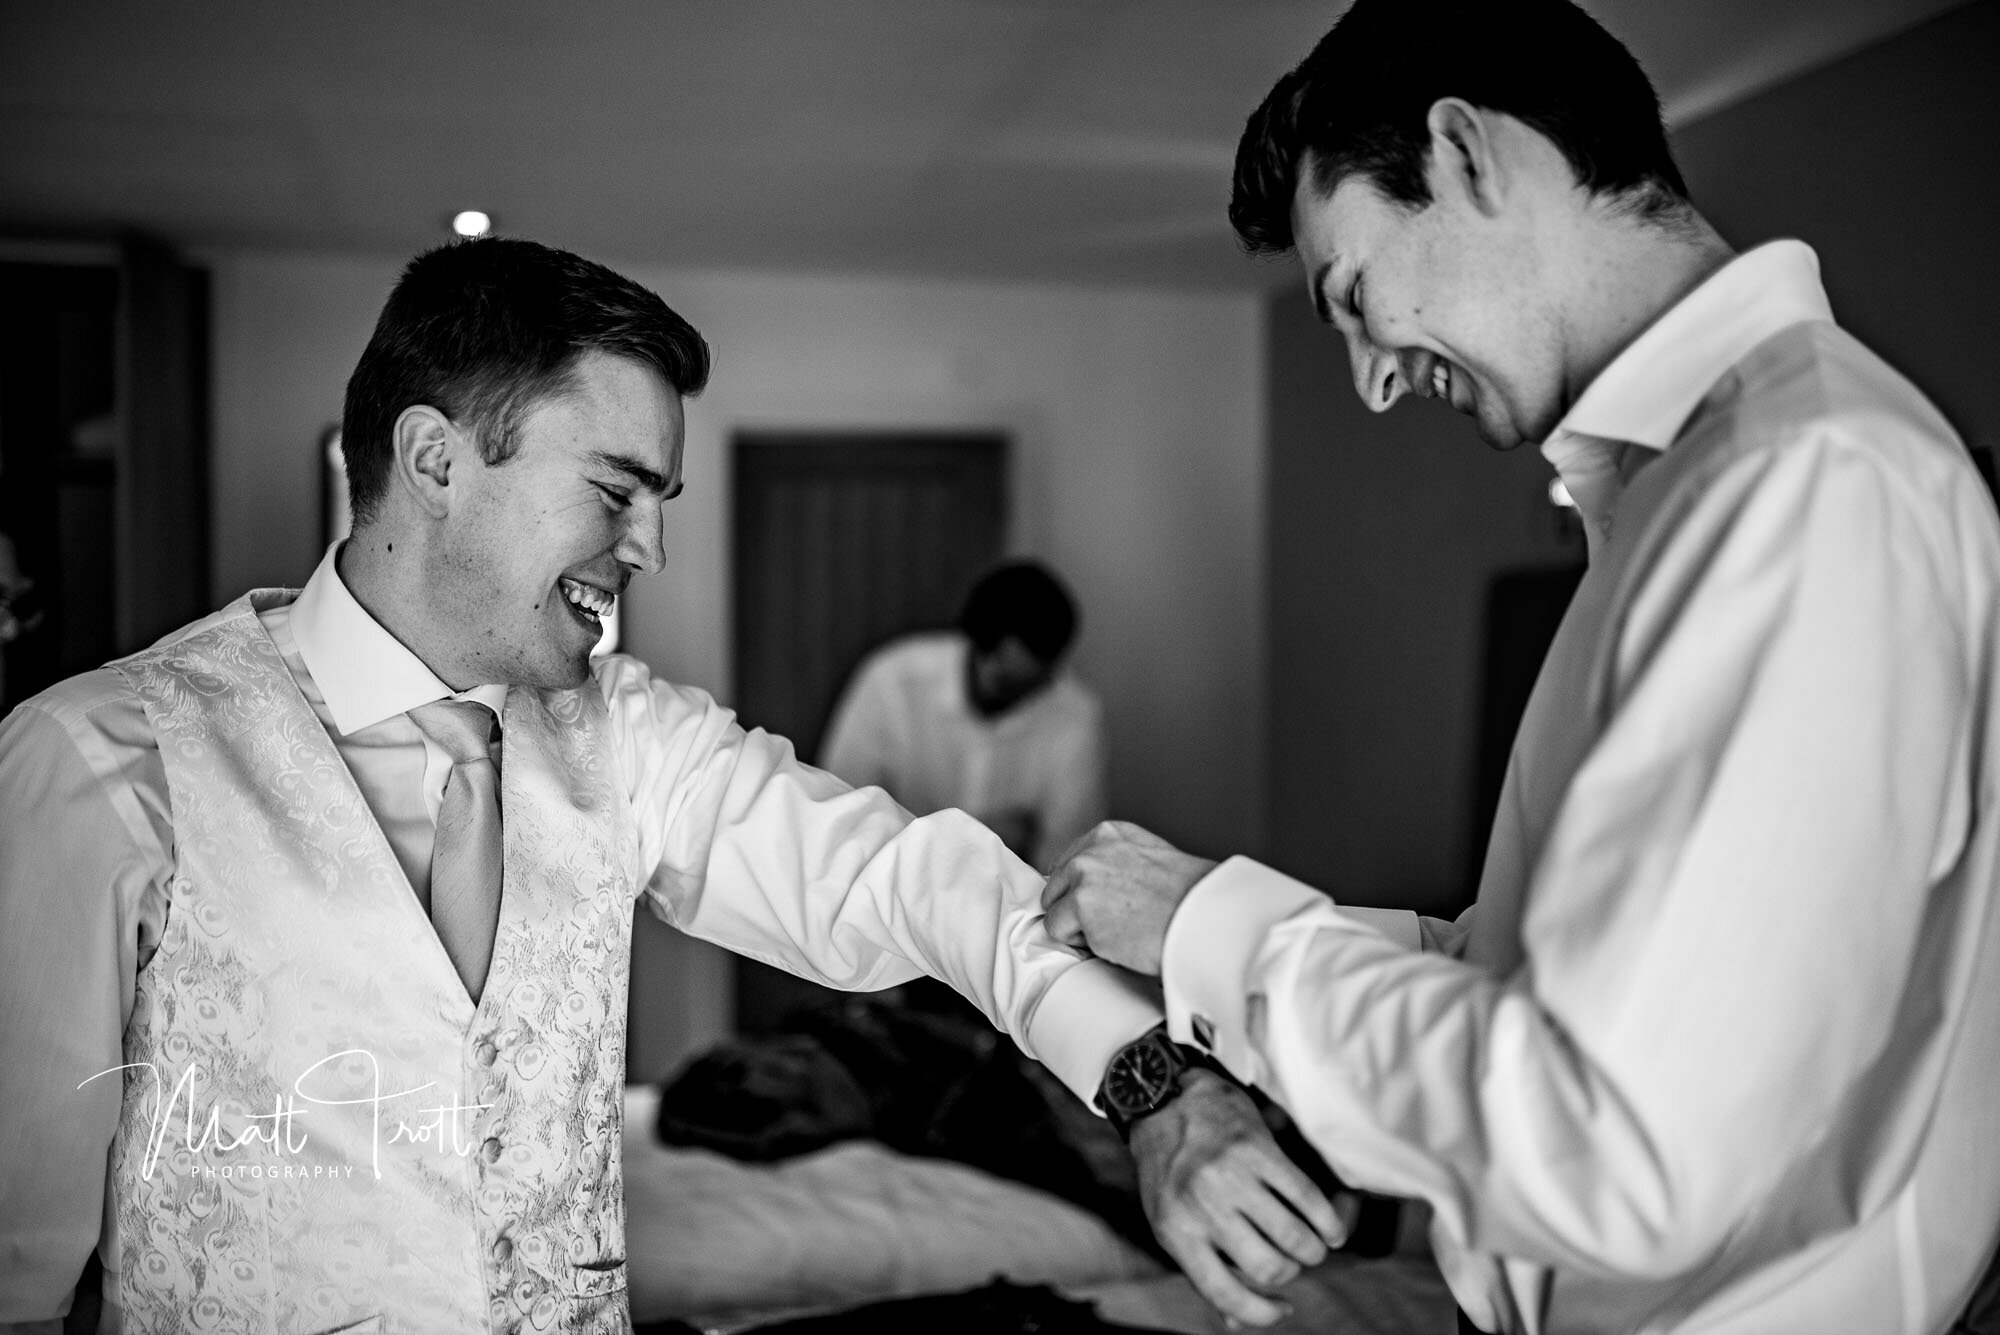 Groom prep - adding cufflinks at a wedding in Essex